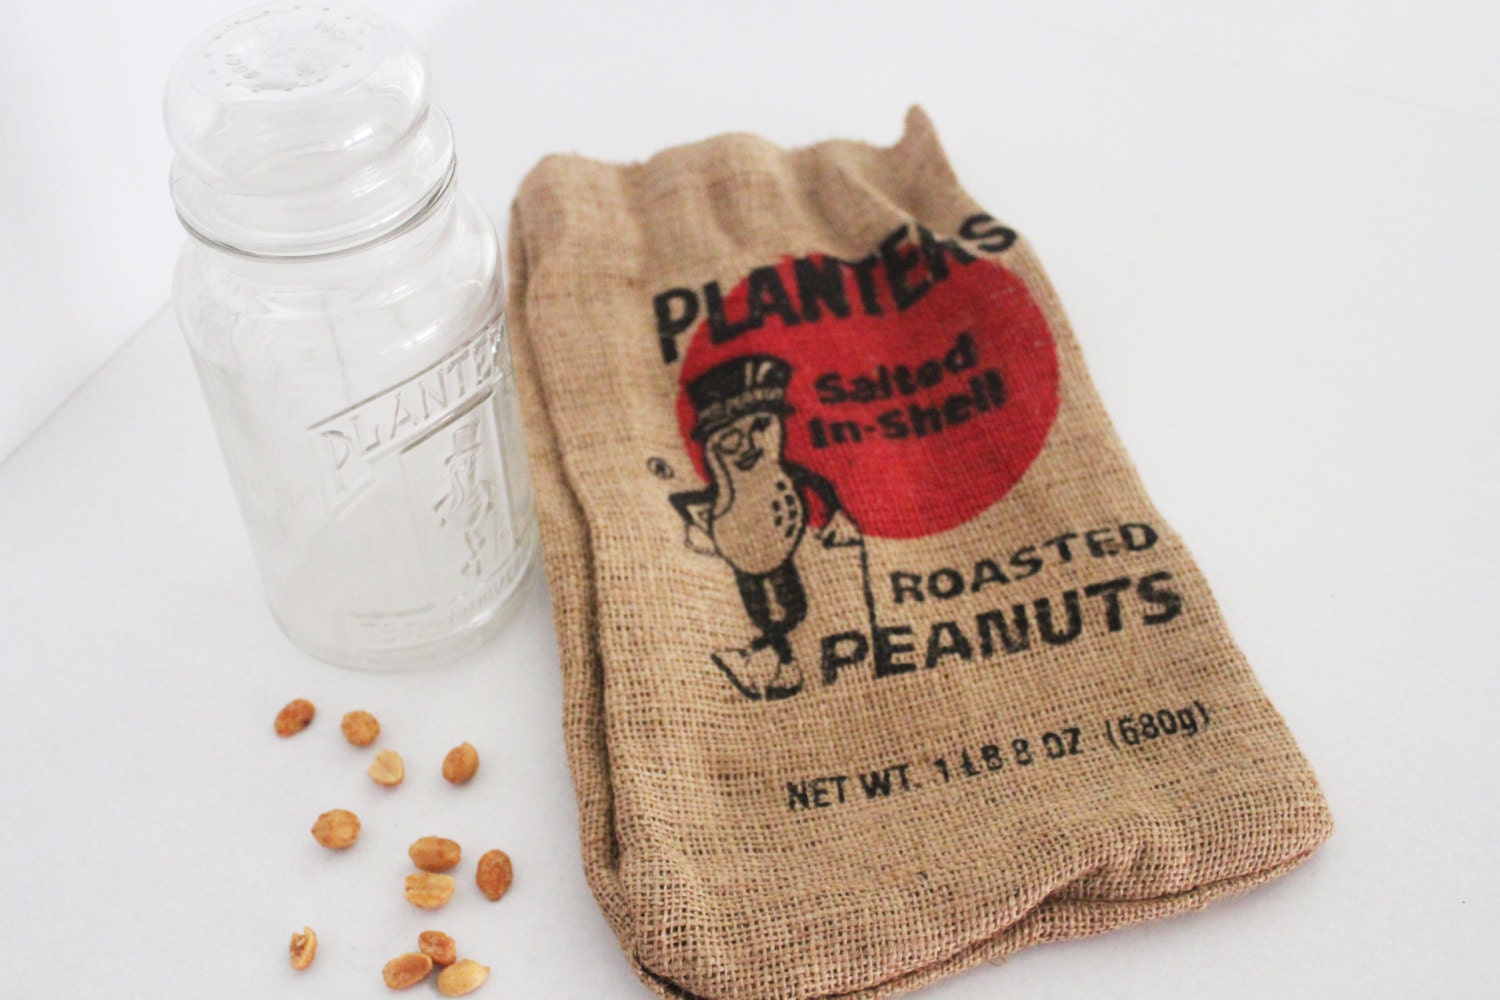 Vintage Planters Peanuts Burlap Sack and Glass Jar